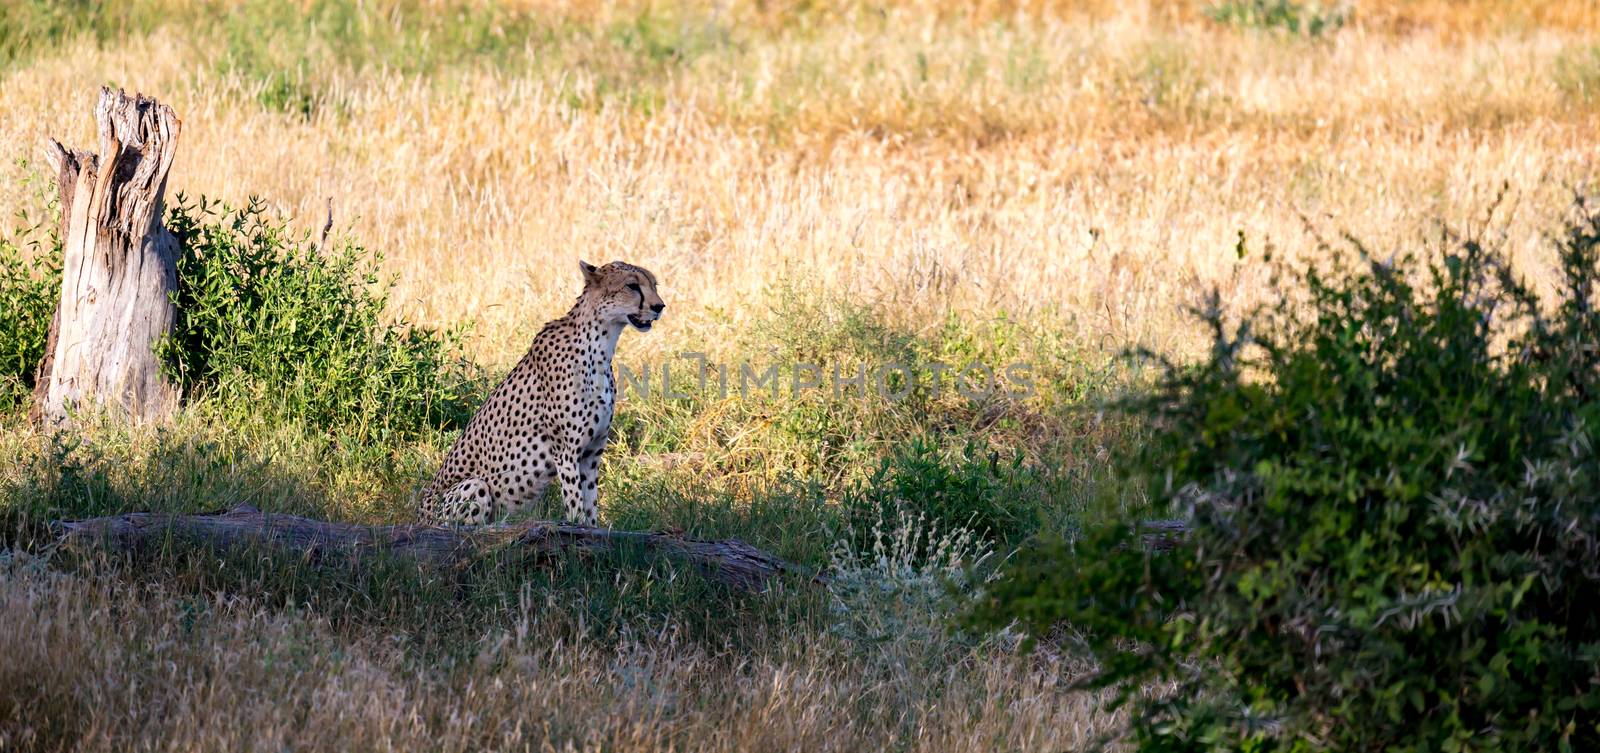 Cheetah in the grassland of the savannah in Kenya by 25ehaag6